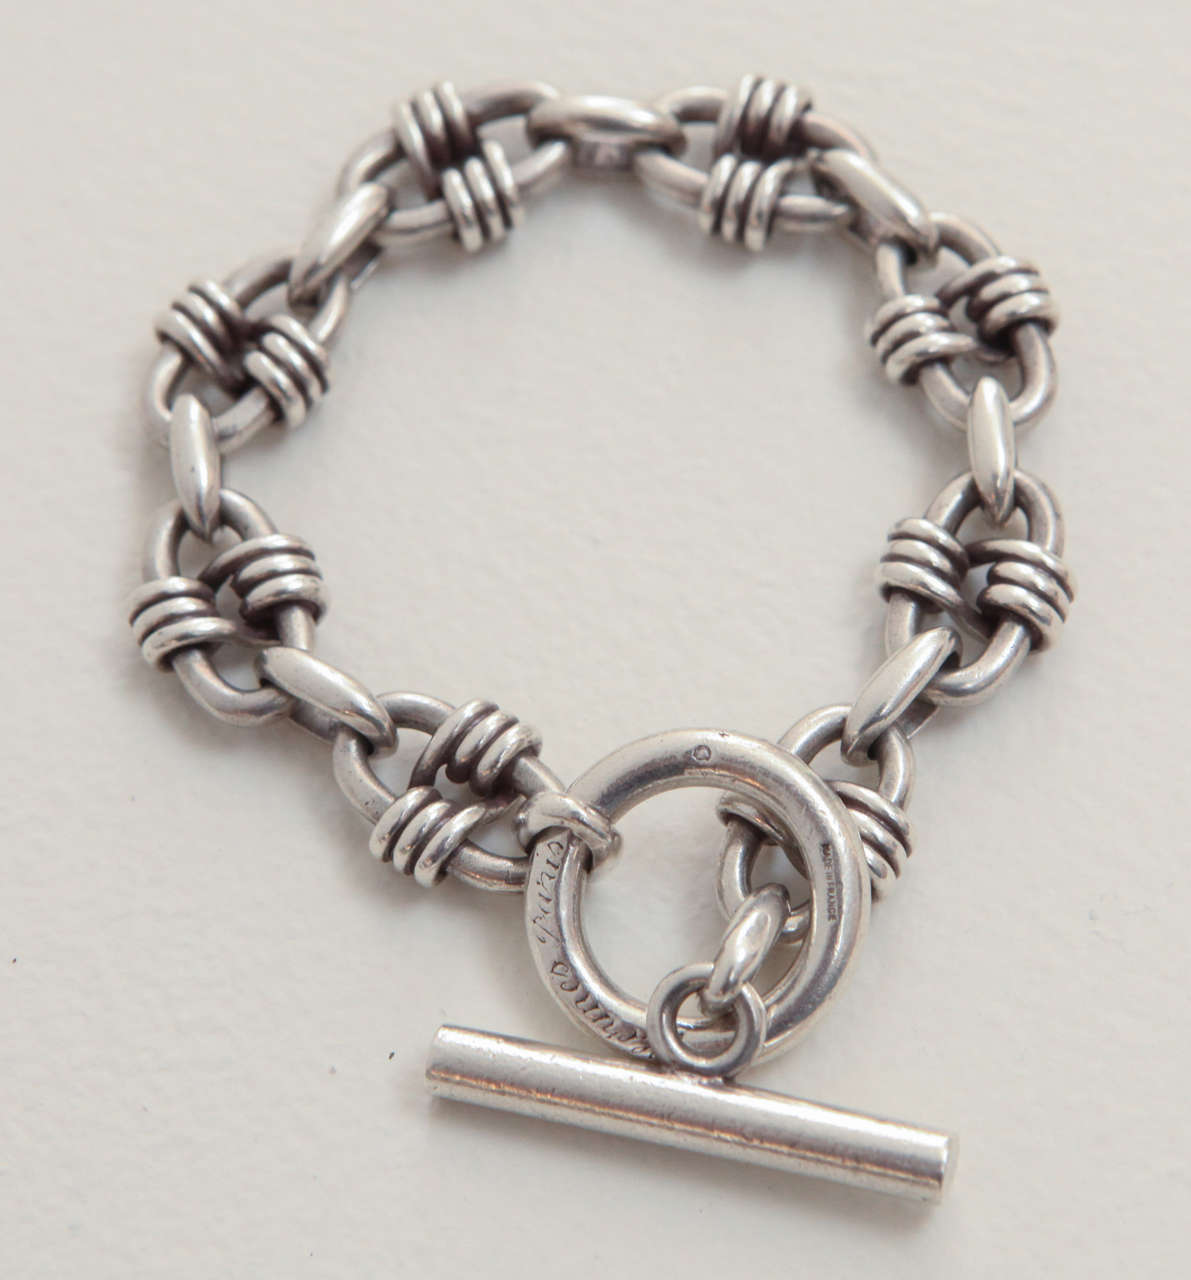 Vintage sterling silver chain link Hermes bracelet, with original vintage engraved manufacturer and silver markings. Wonderful patina and condition.